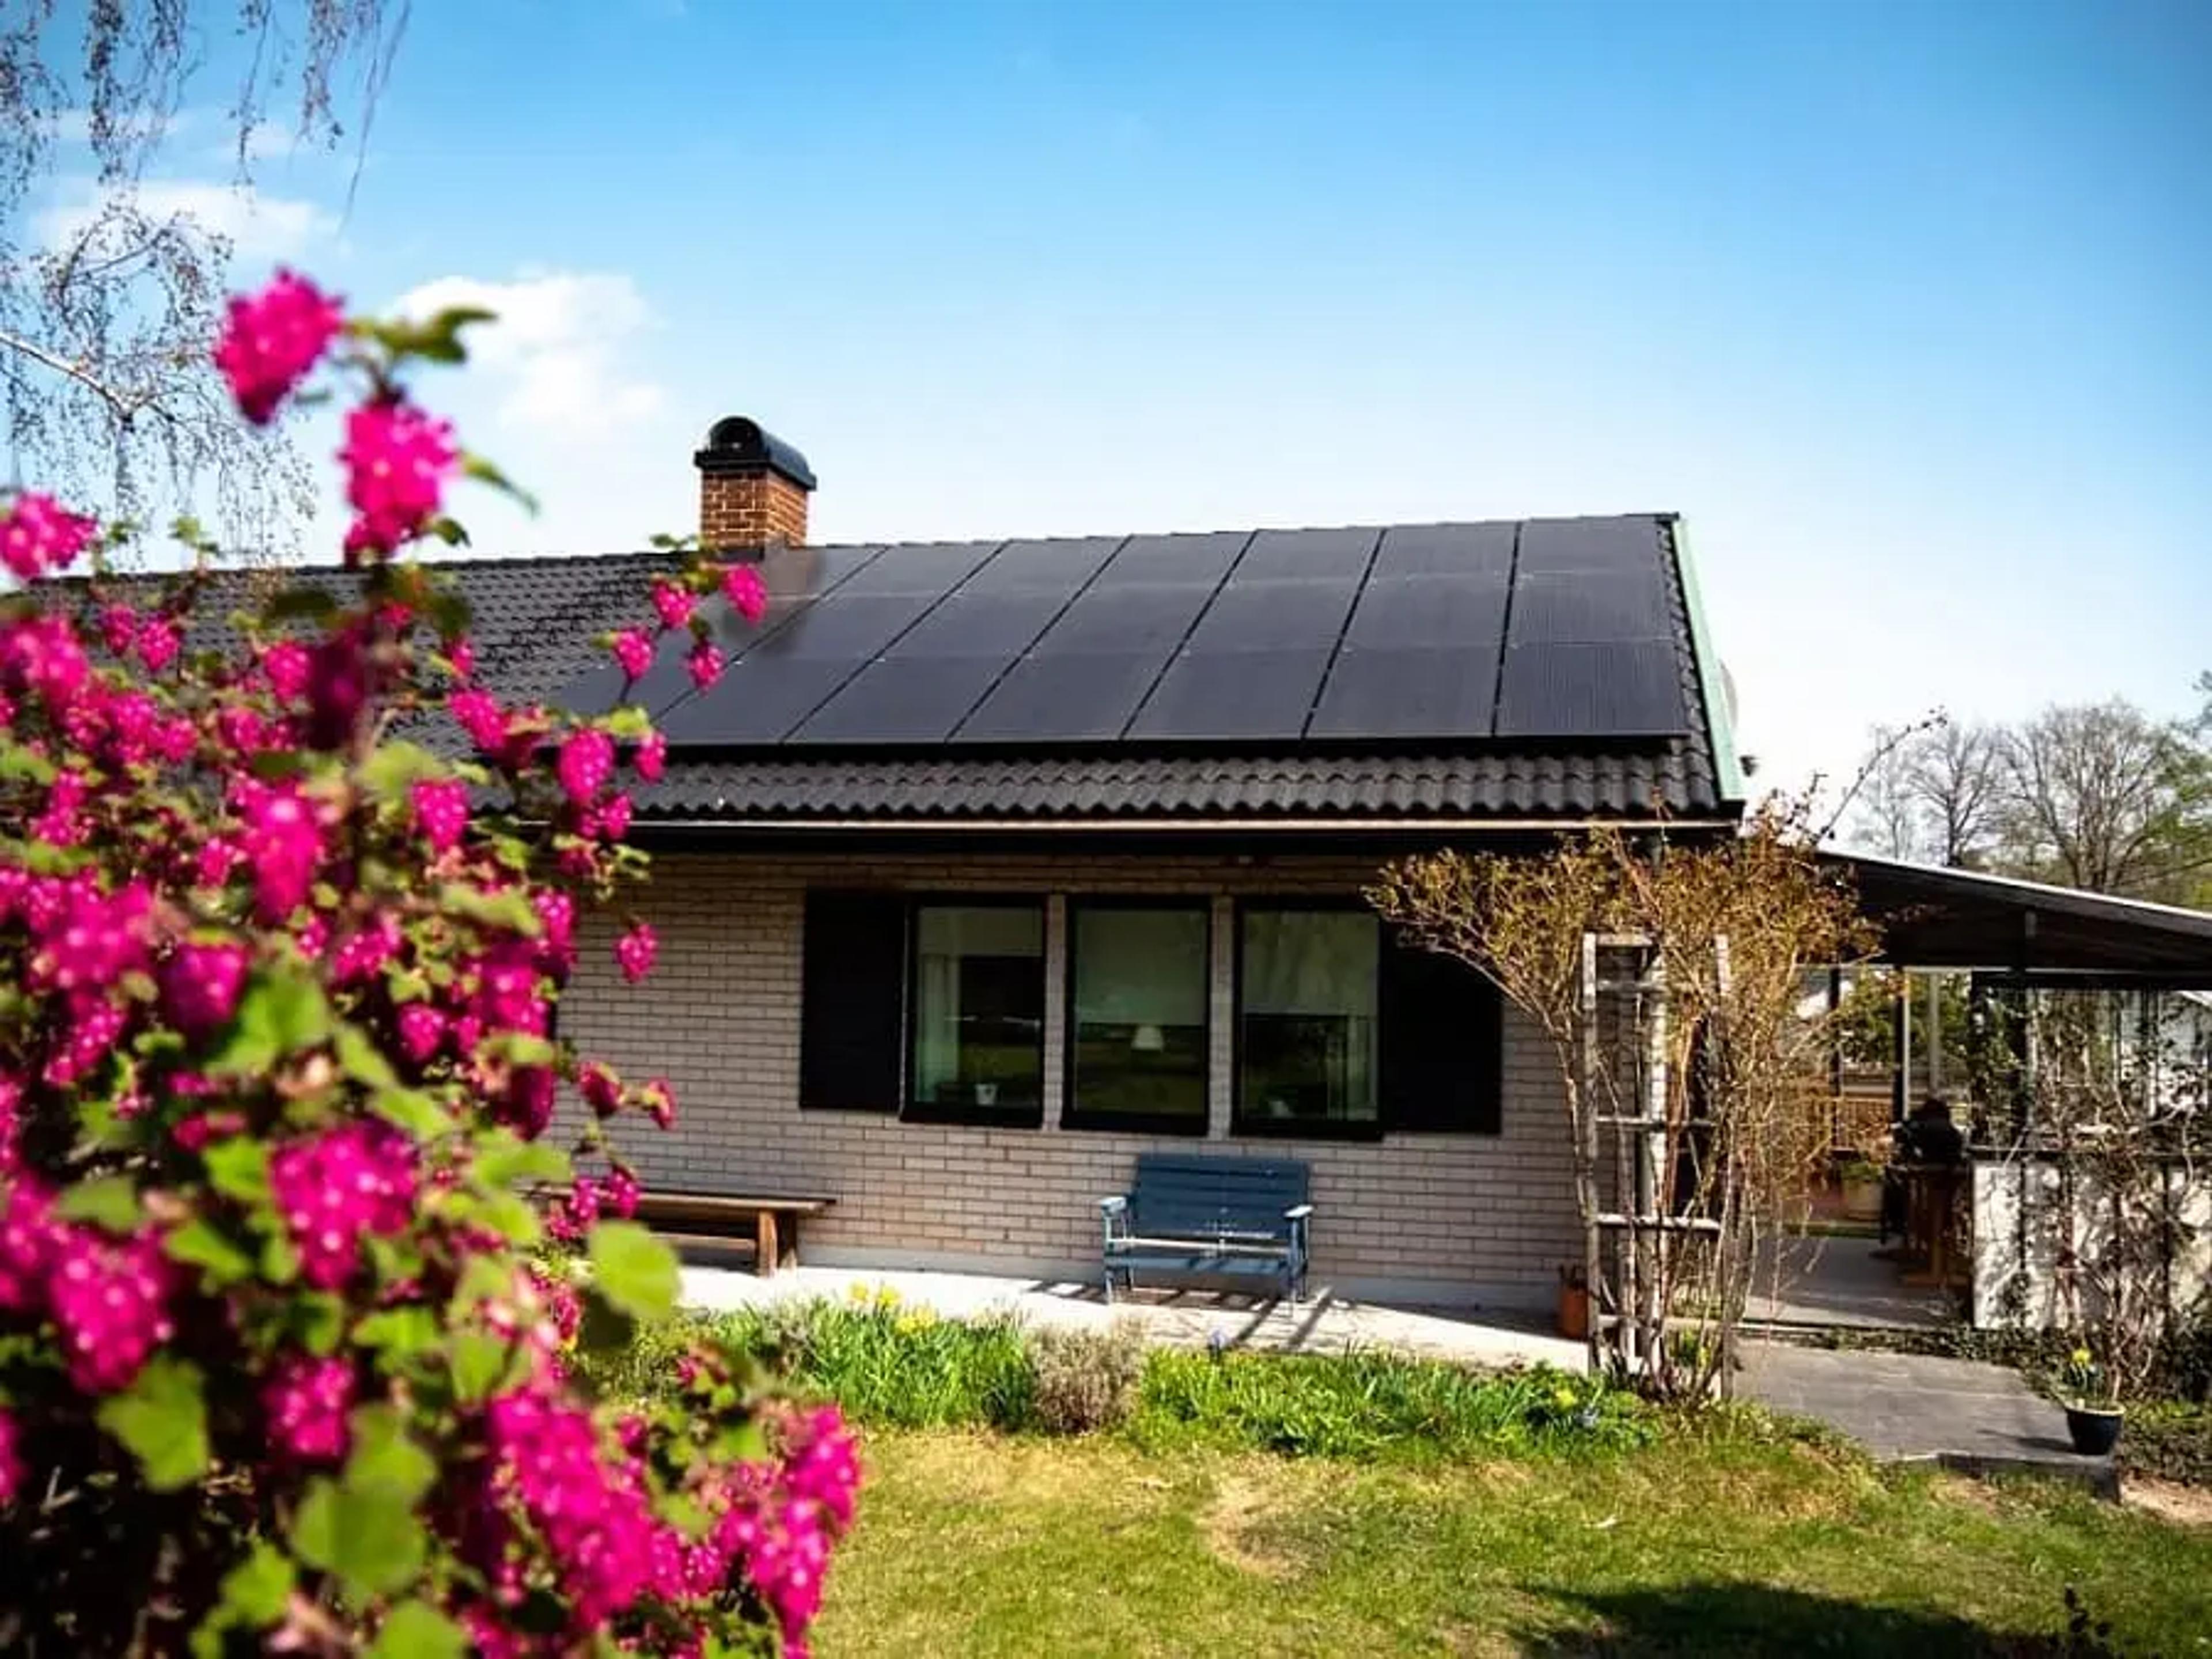 zonnepanelen zonder investering